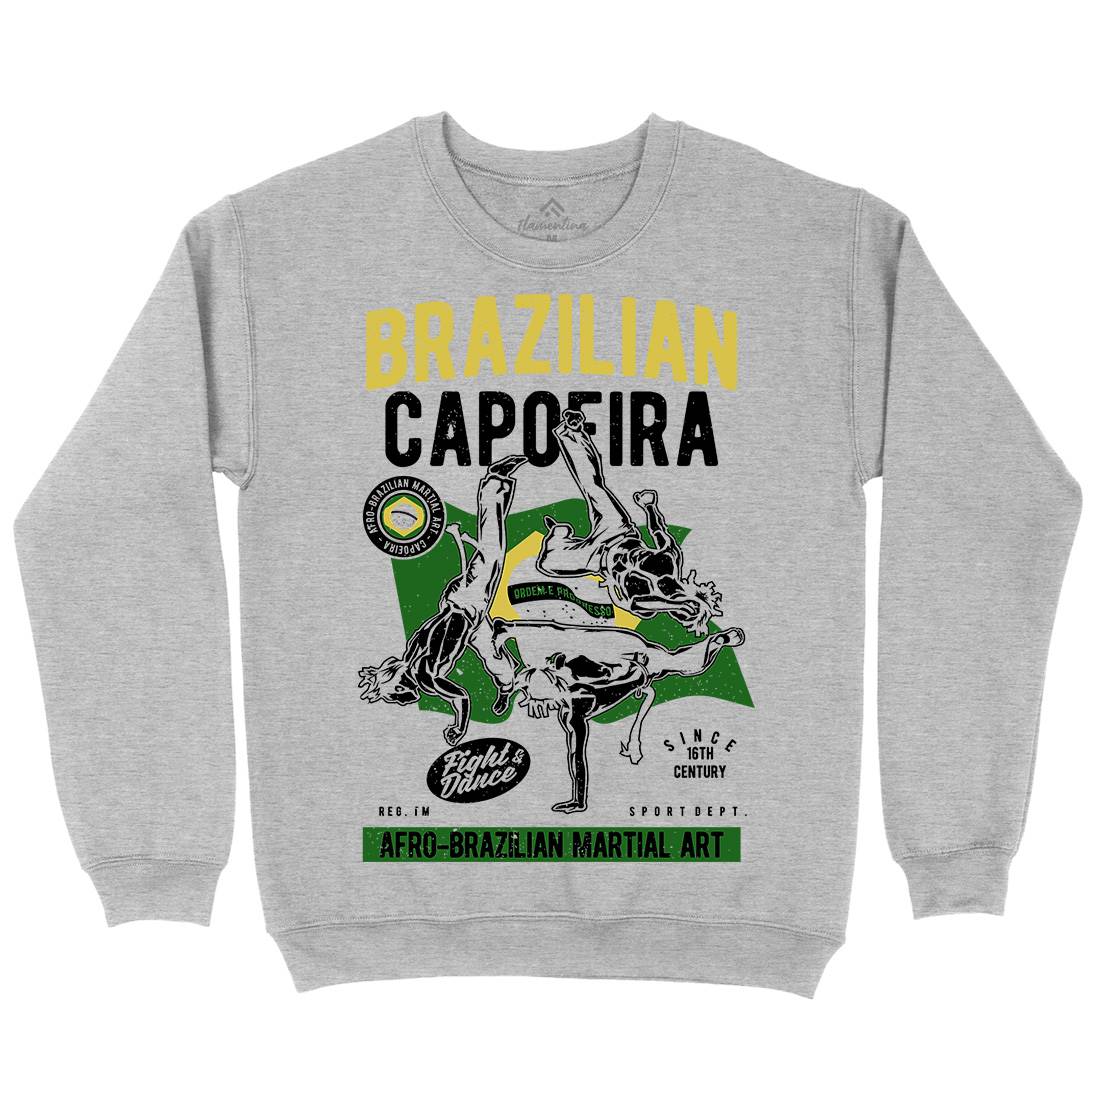 Brazilian Capoeira Kids Crew Neck Sweatshirt Sport A626